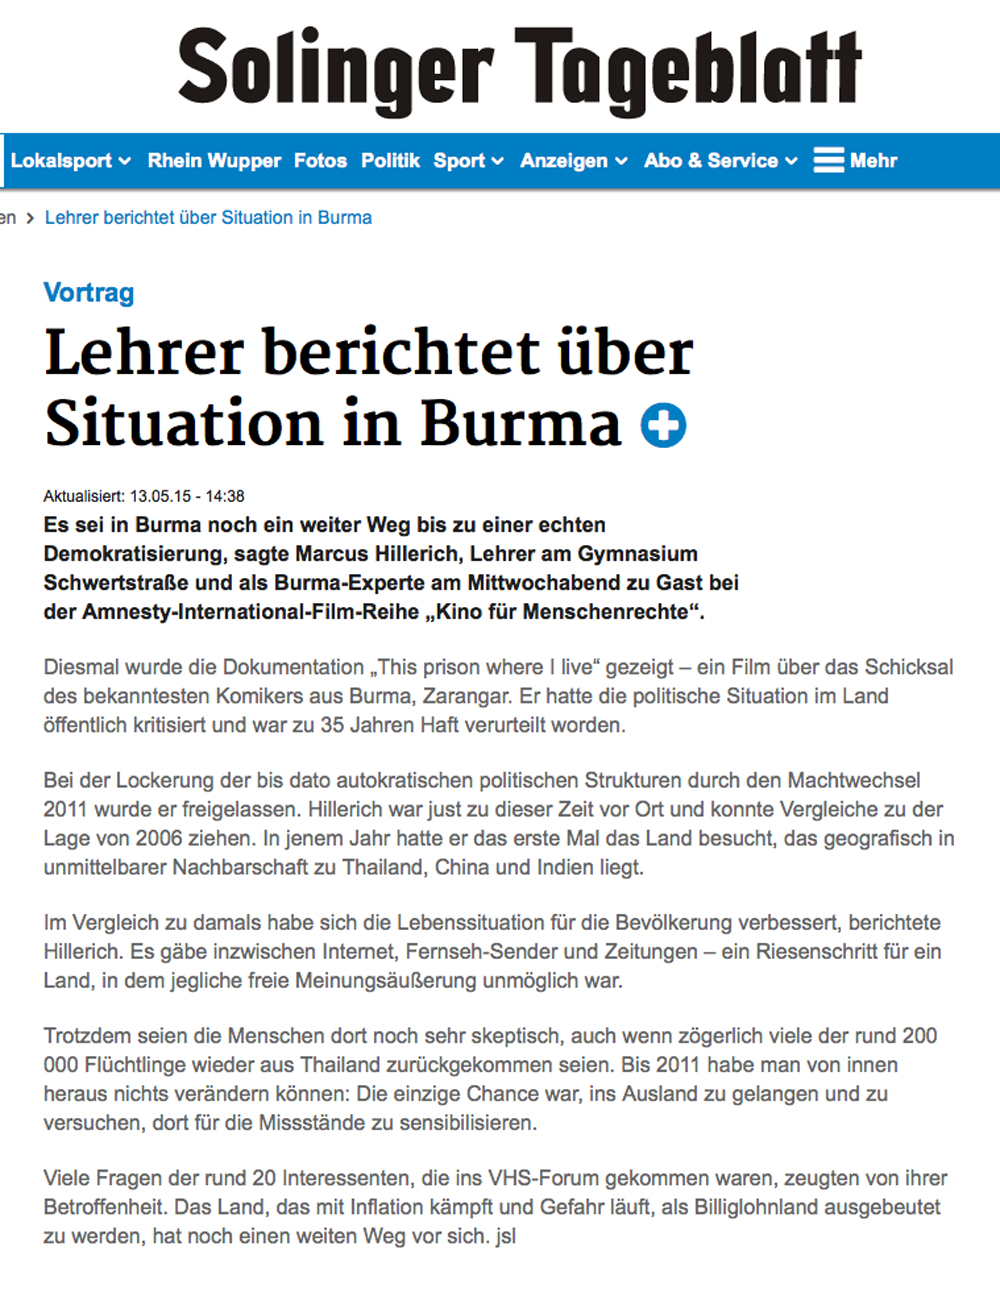 ST-Bericht über Burma